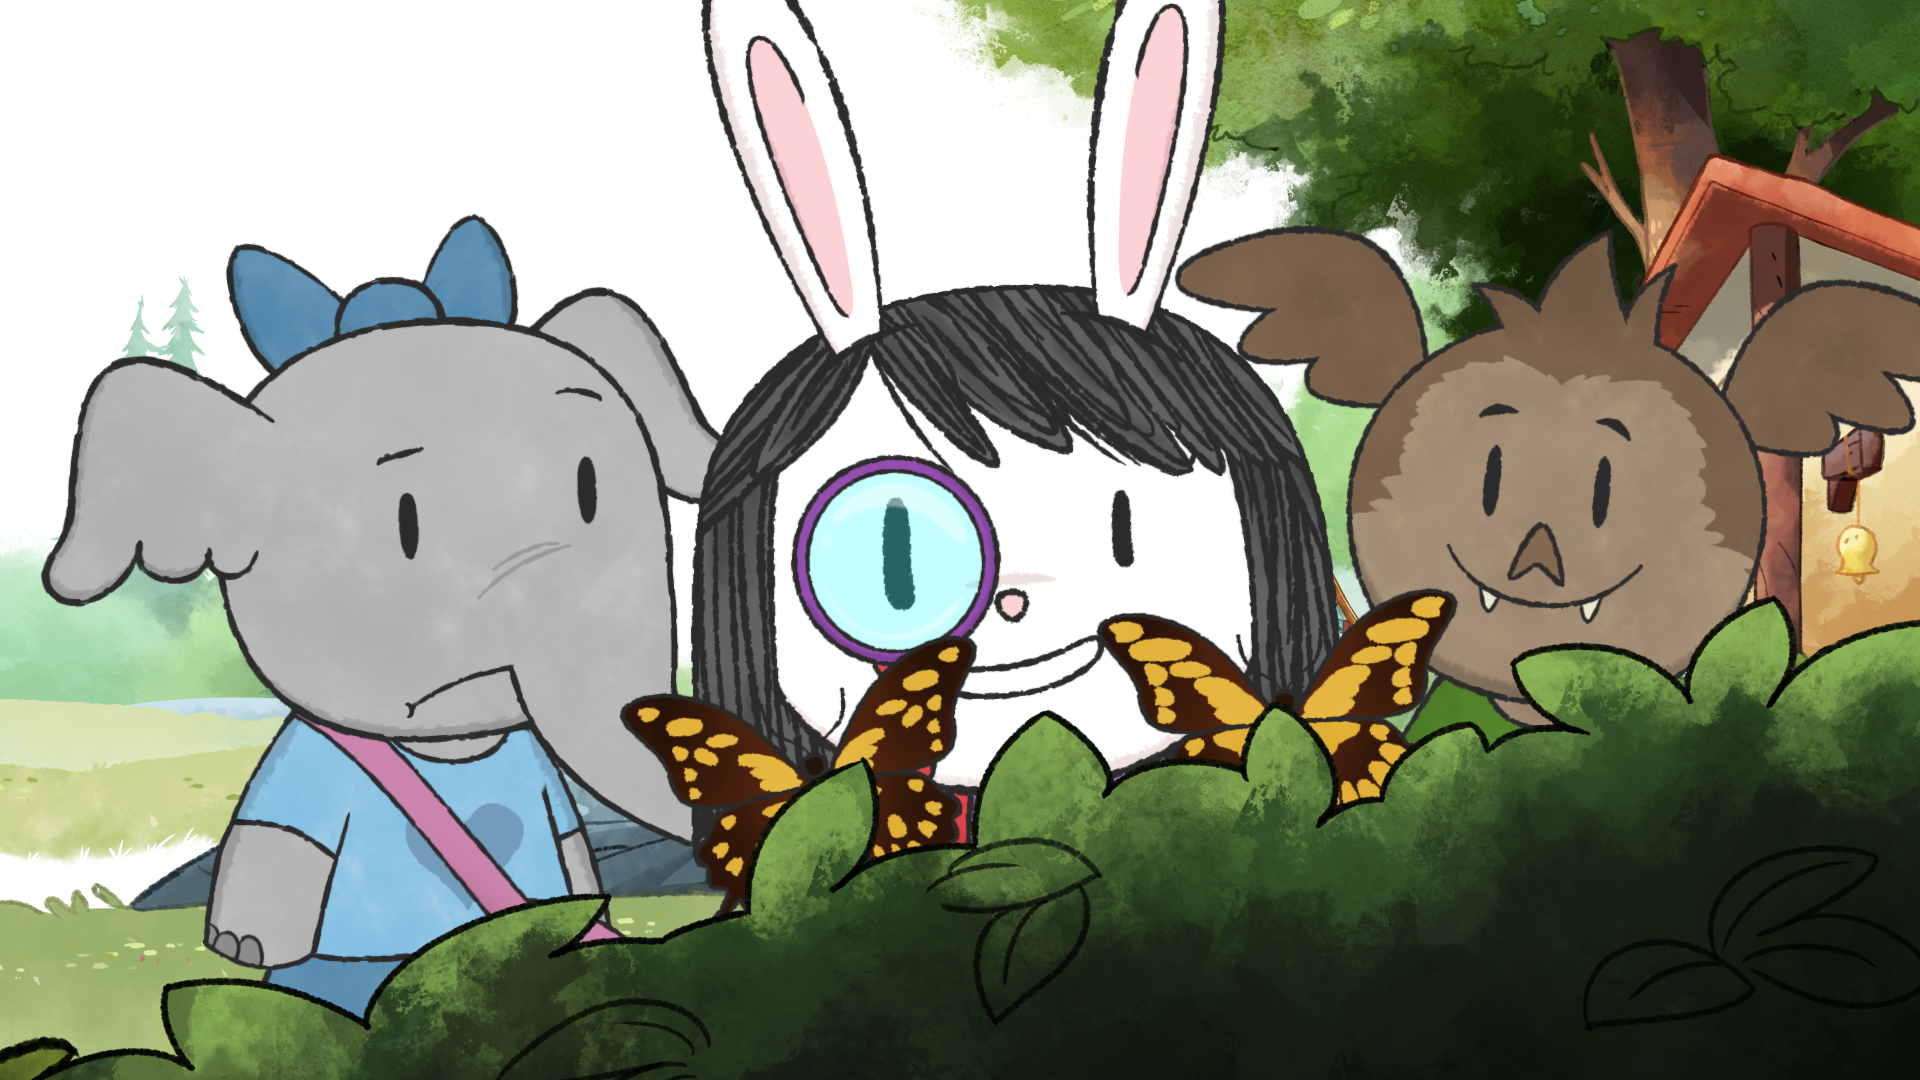 Cartoon elephant, bunny and bat looking at butterflies